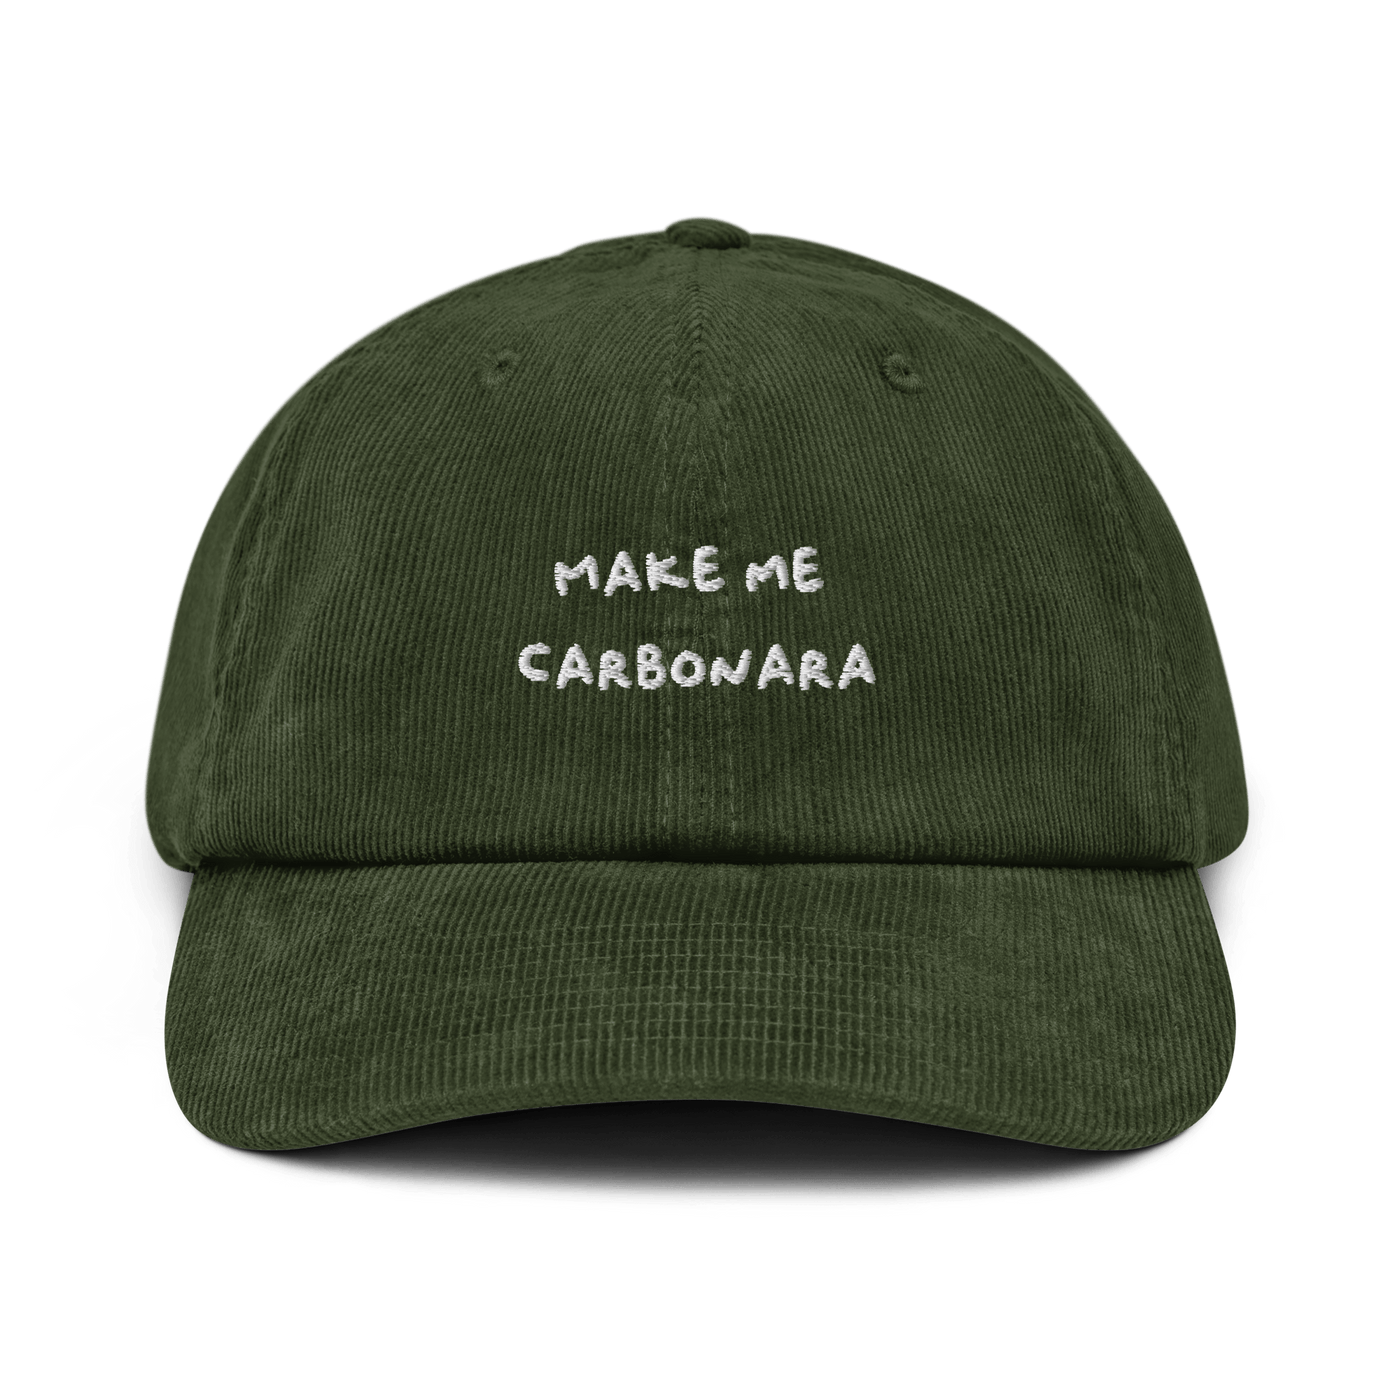 Make me Carbonara Corduroy hat - Dark Olive - - Just Another Cap Store